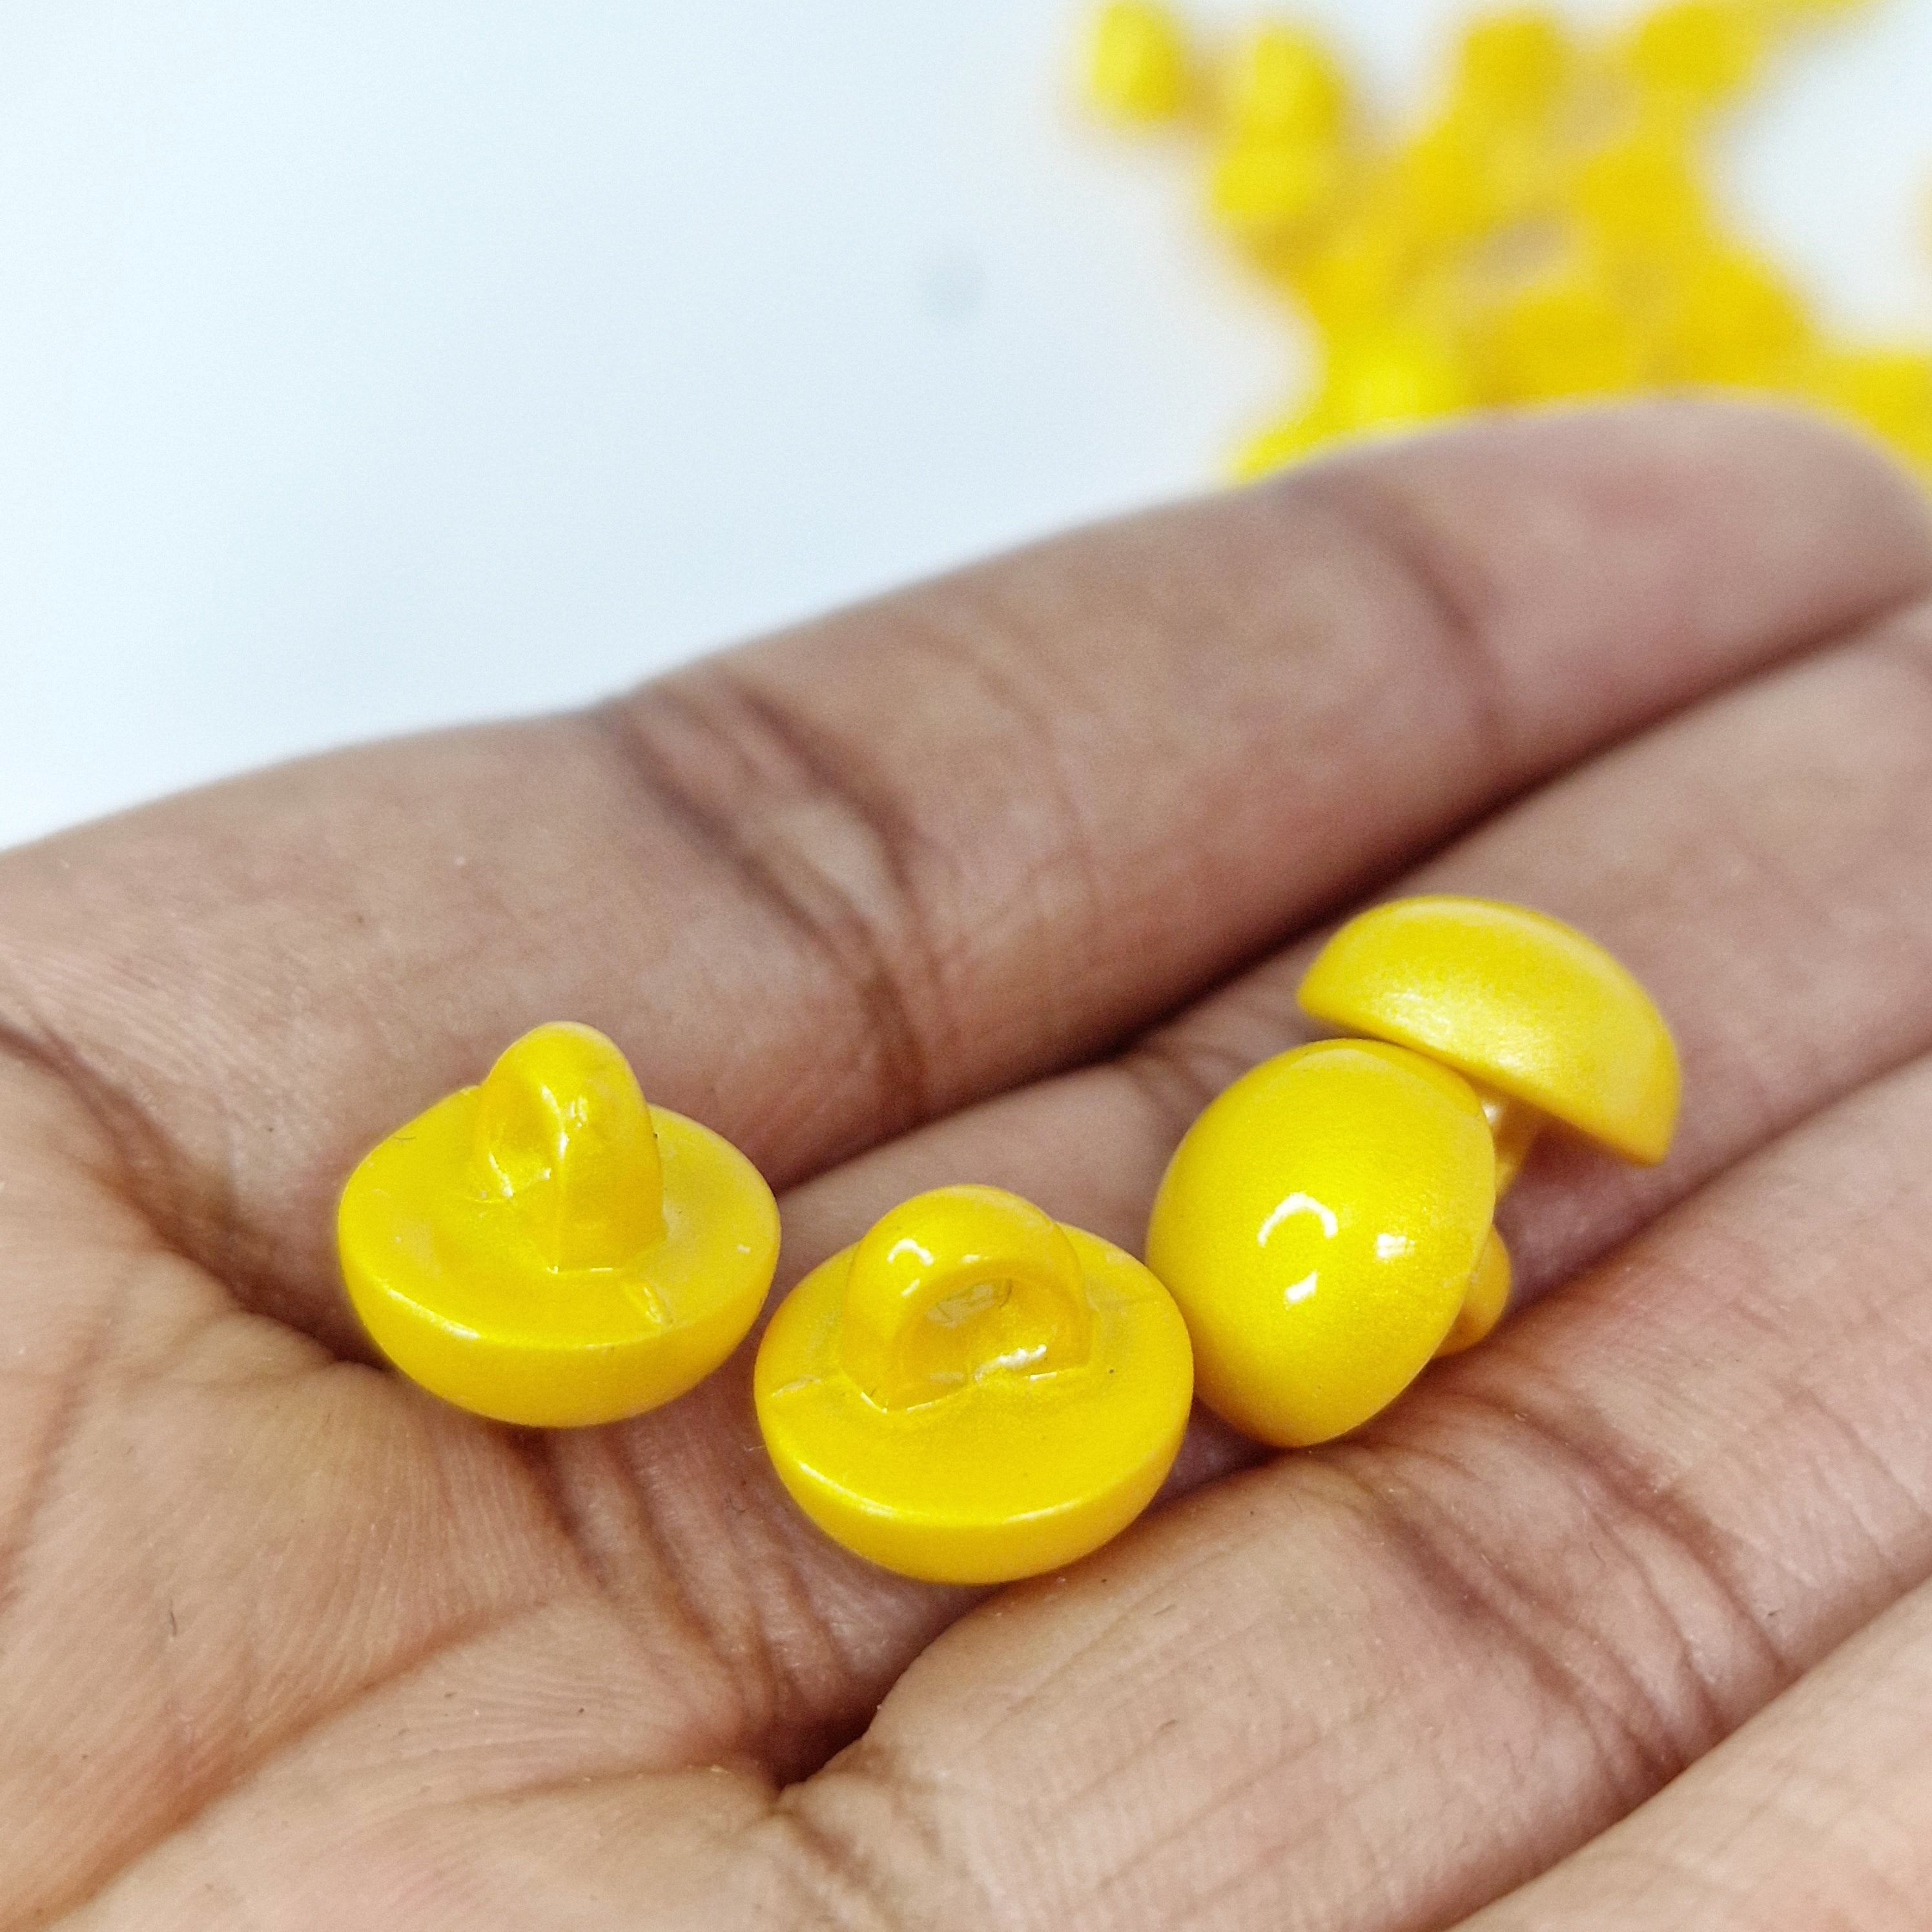 MajorCrafts 24pcs 11mm Yellow High-Grade Acrylic Small Round Sewing Mushroom Shank Buttons